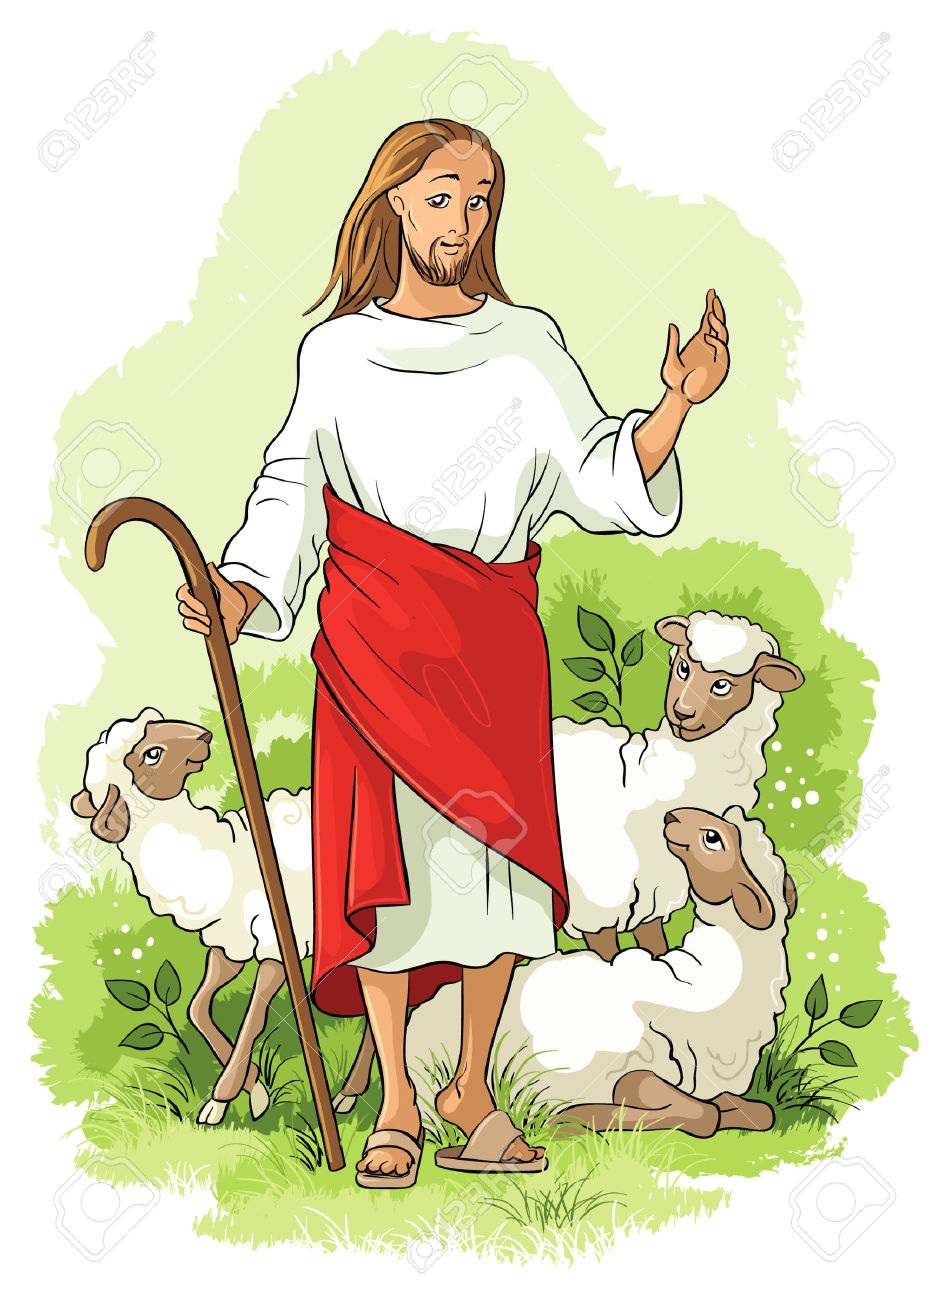 clipart jesus good shepherd - photo #44